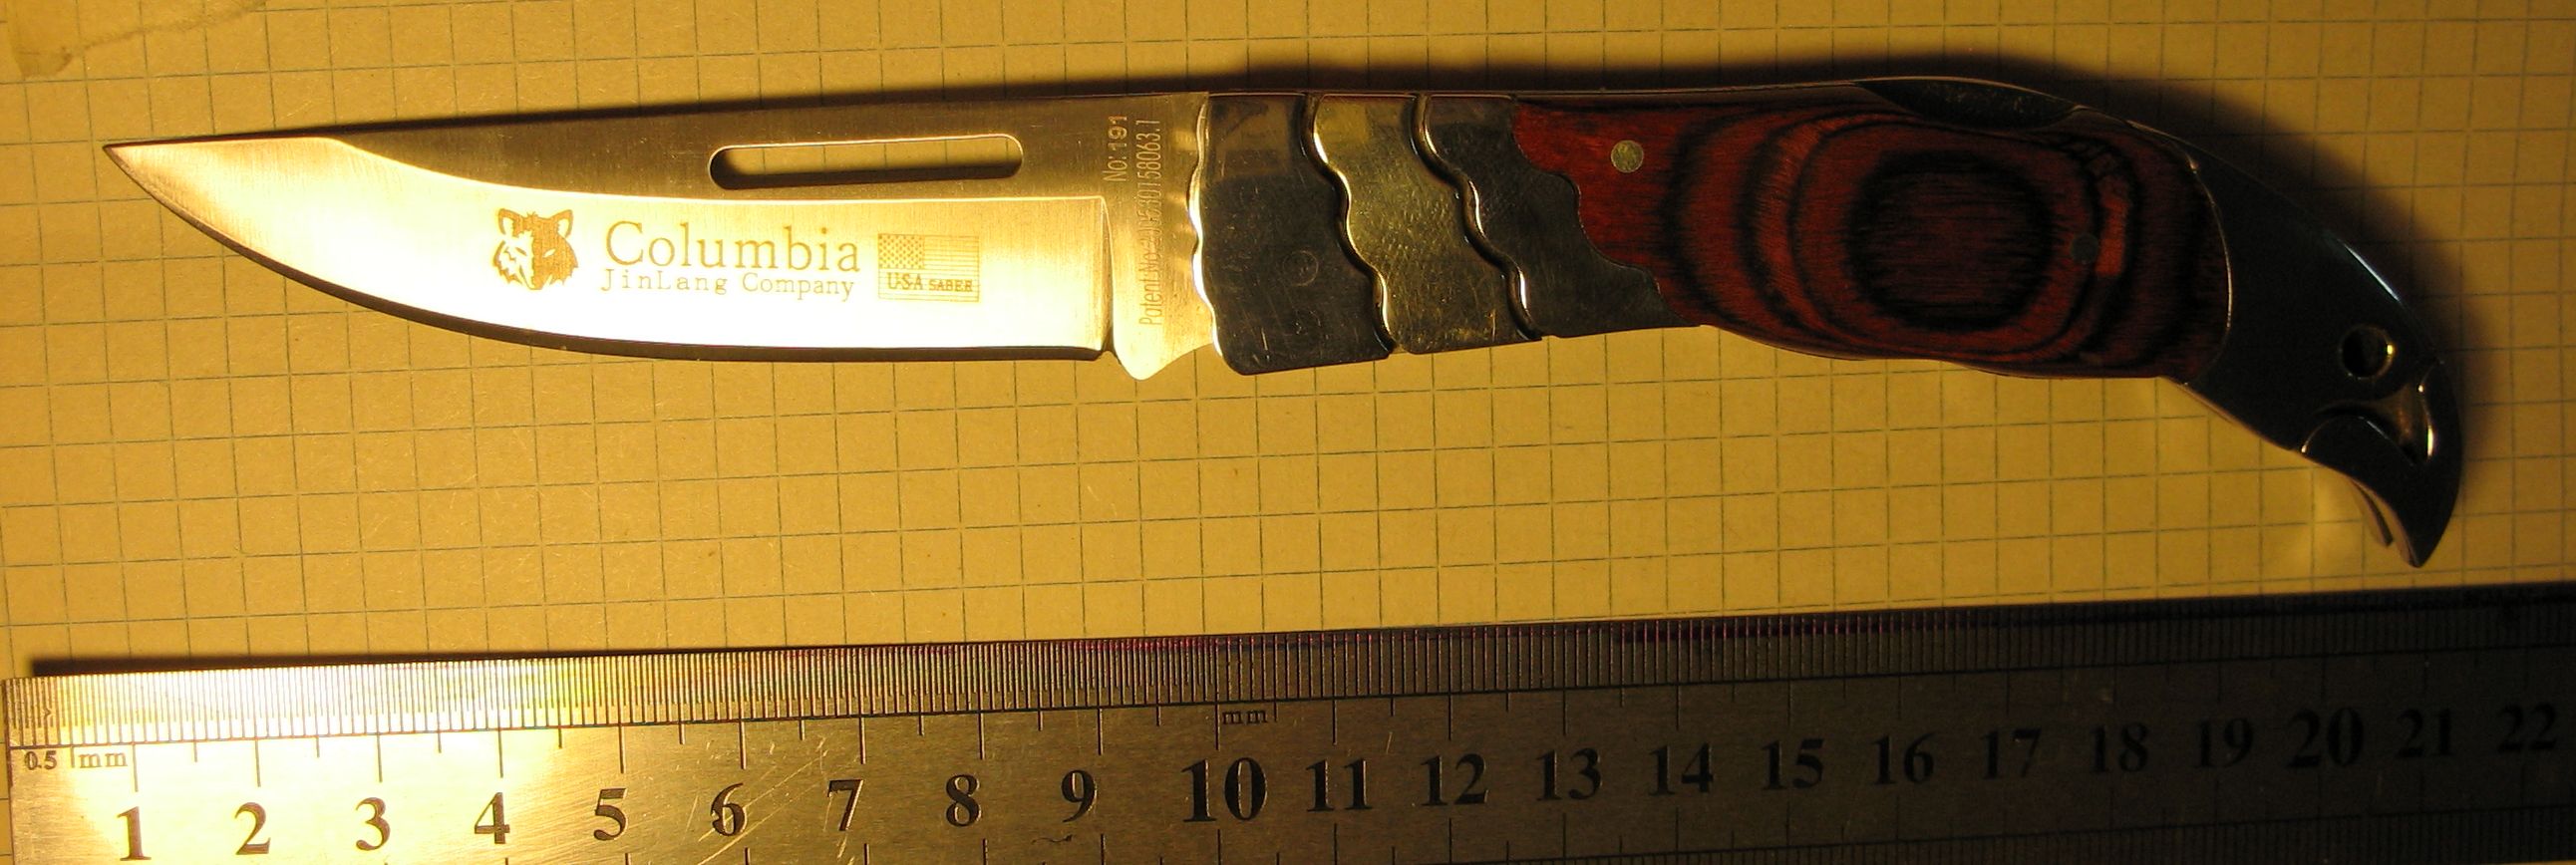 Раскладной нож Columbia, фирма "JinLand Company , Тамбов